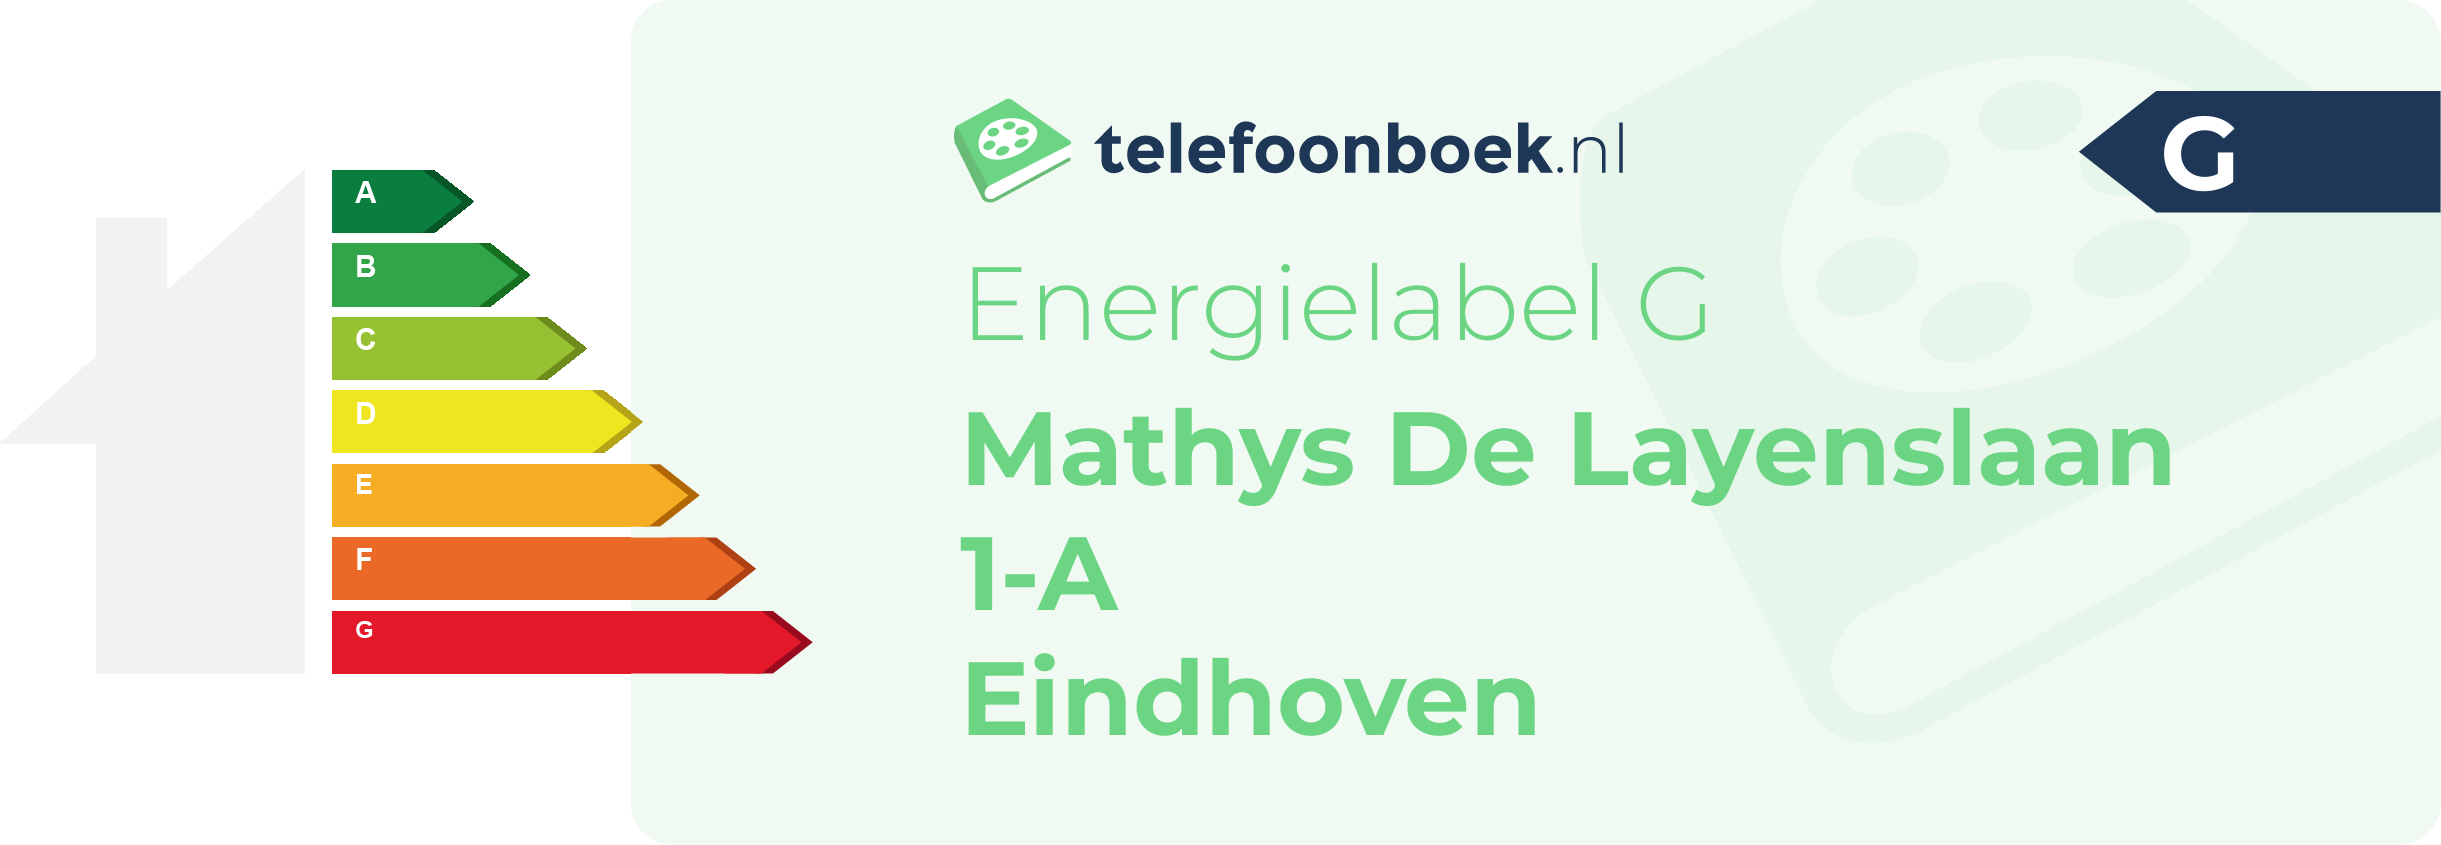 Energielabel Mathys De Layenslaan 1-A Eindhoven